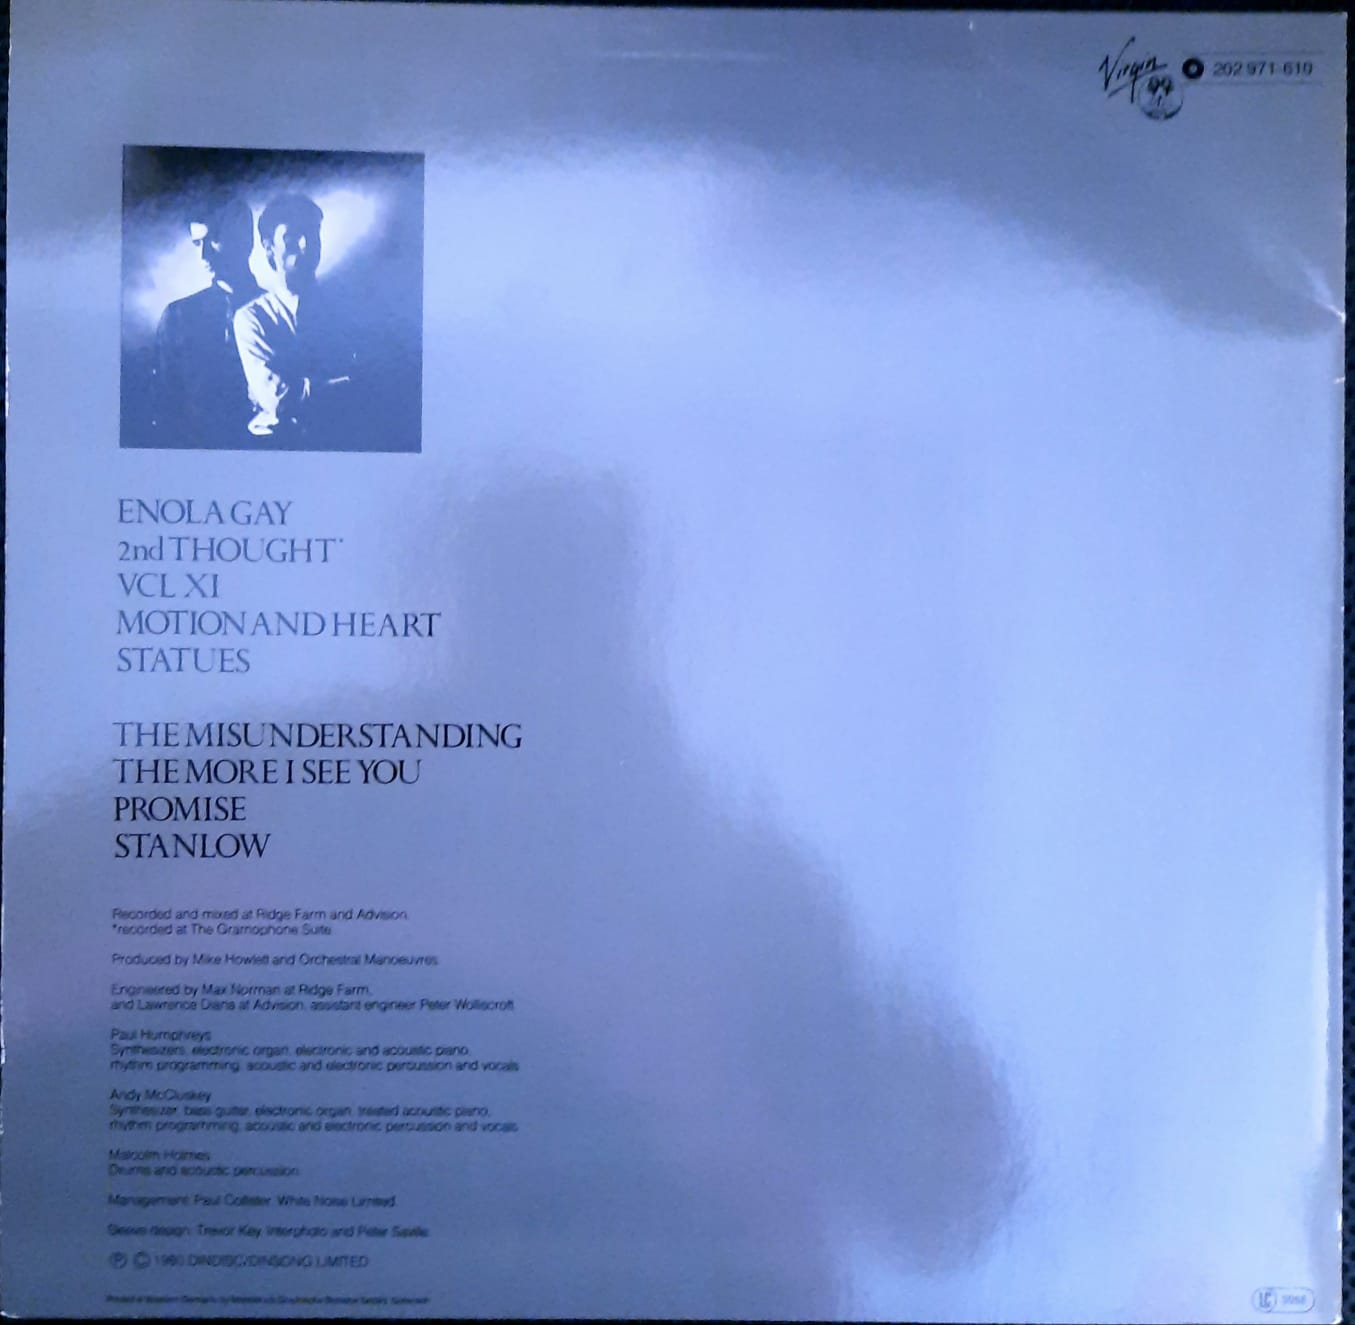 Orchestral Manoeuvres In The Dark (OMD) – Organisation (LP, Alemania, 1982)